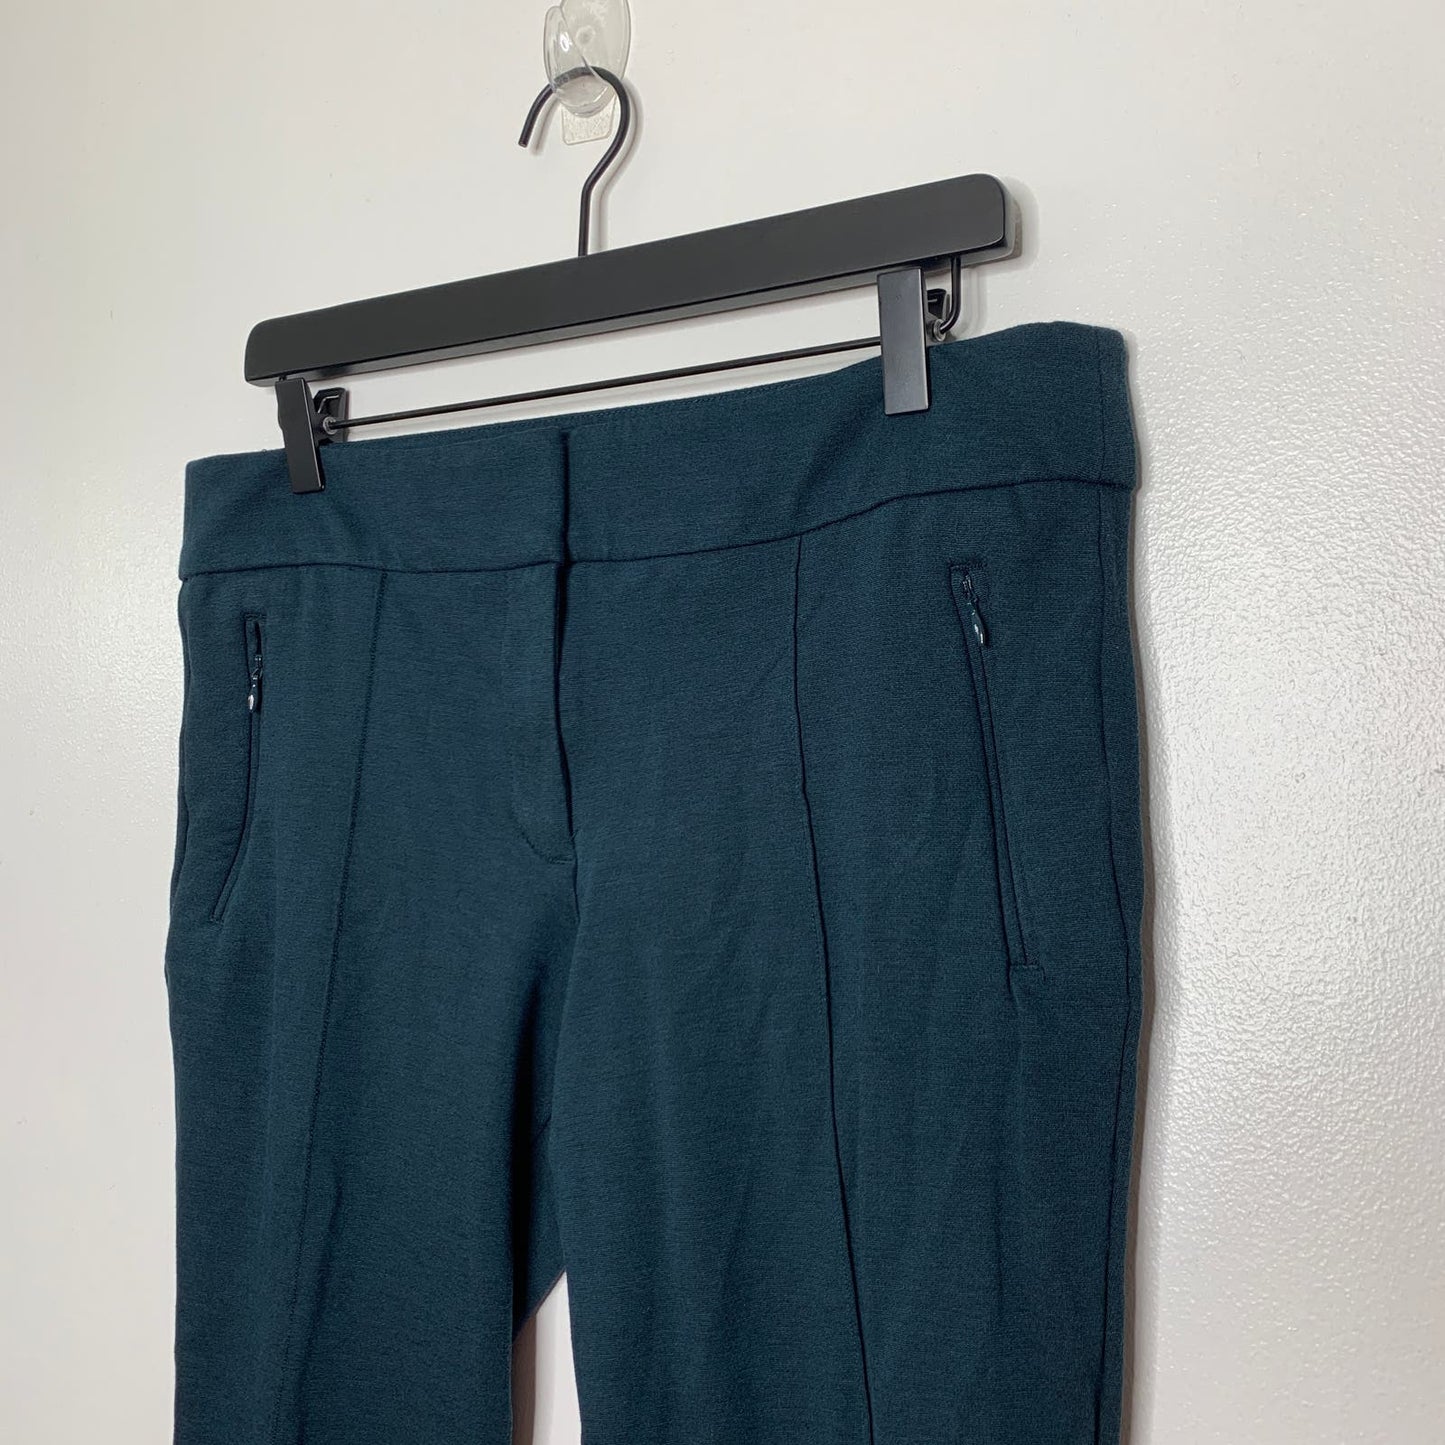 Teal ponte style seamed dress pants SZ 10 TALL